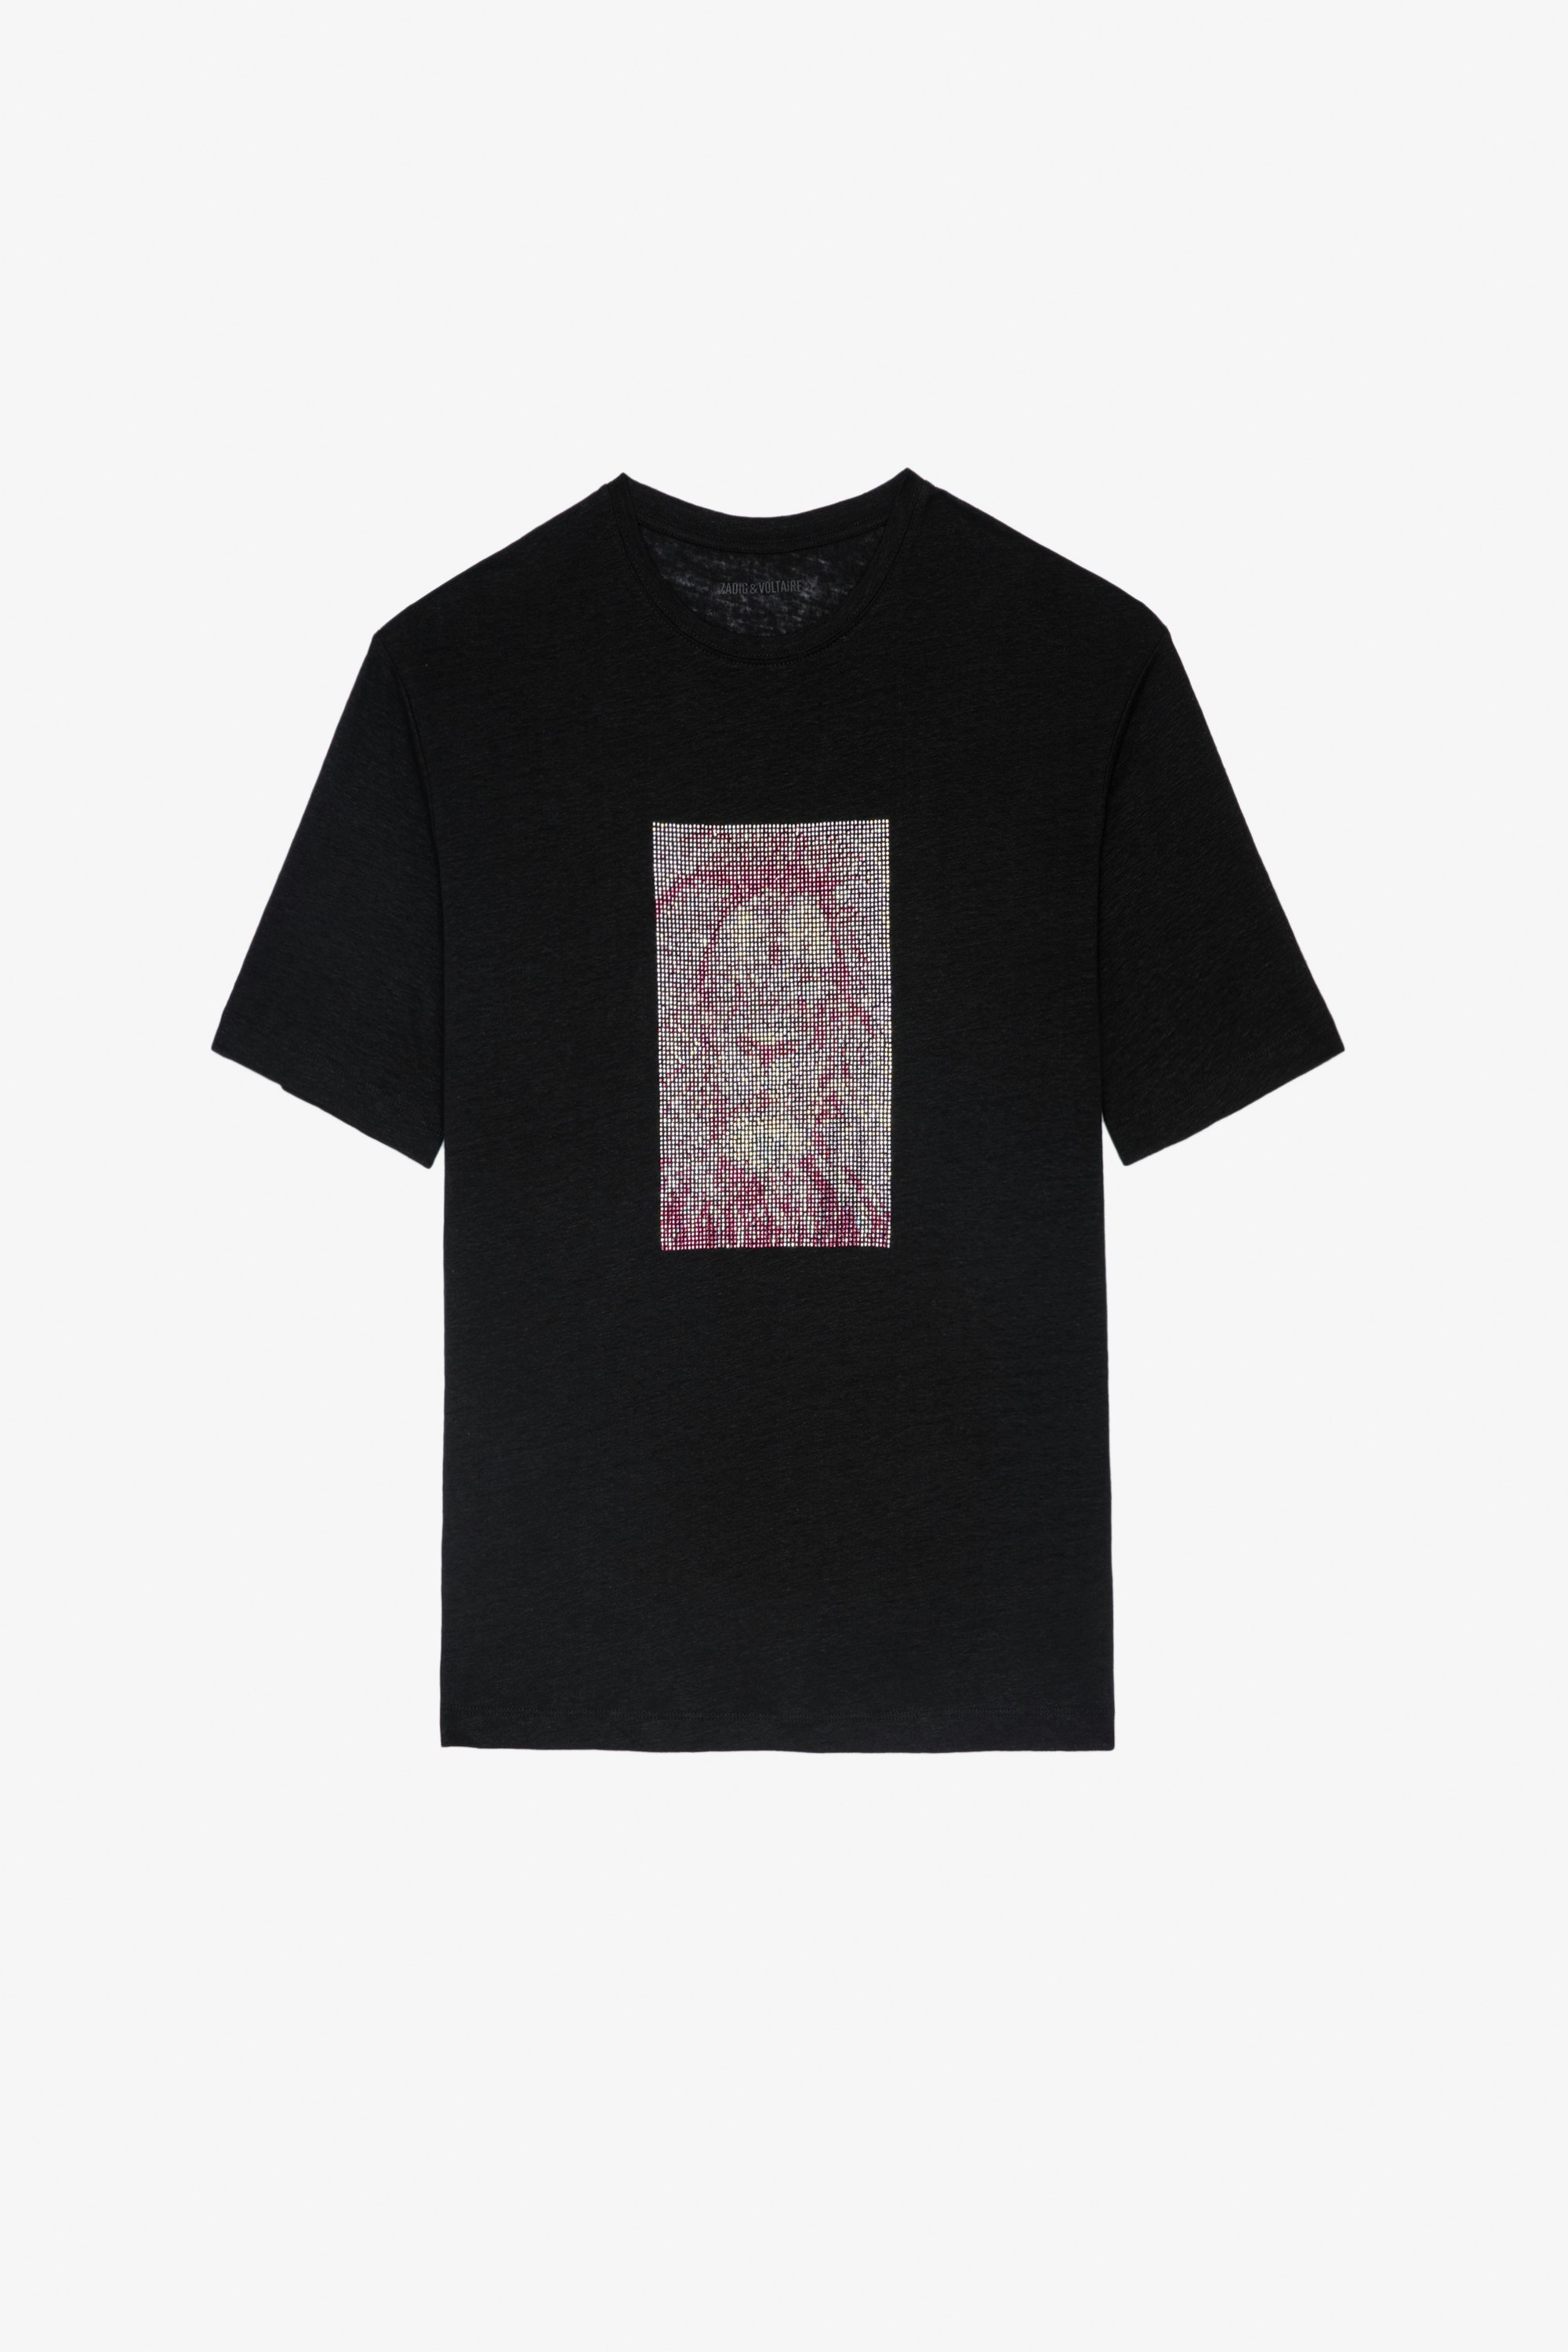 Suzy Linen T-Shirt Women's black linen t-shirt with contrasting lion set in rhinestones